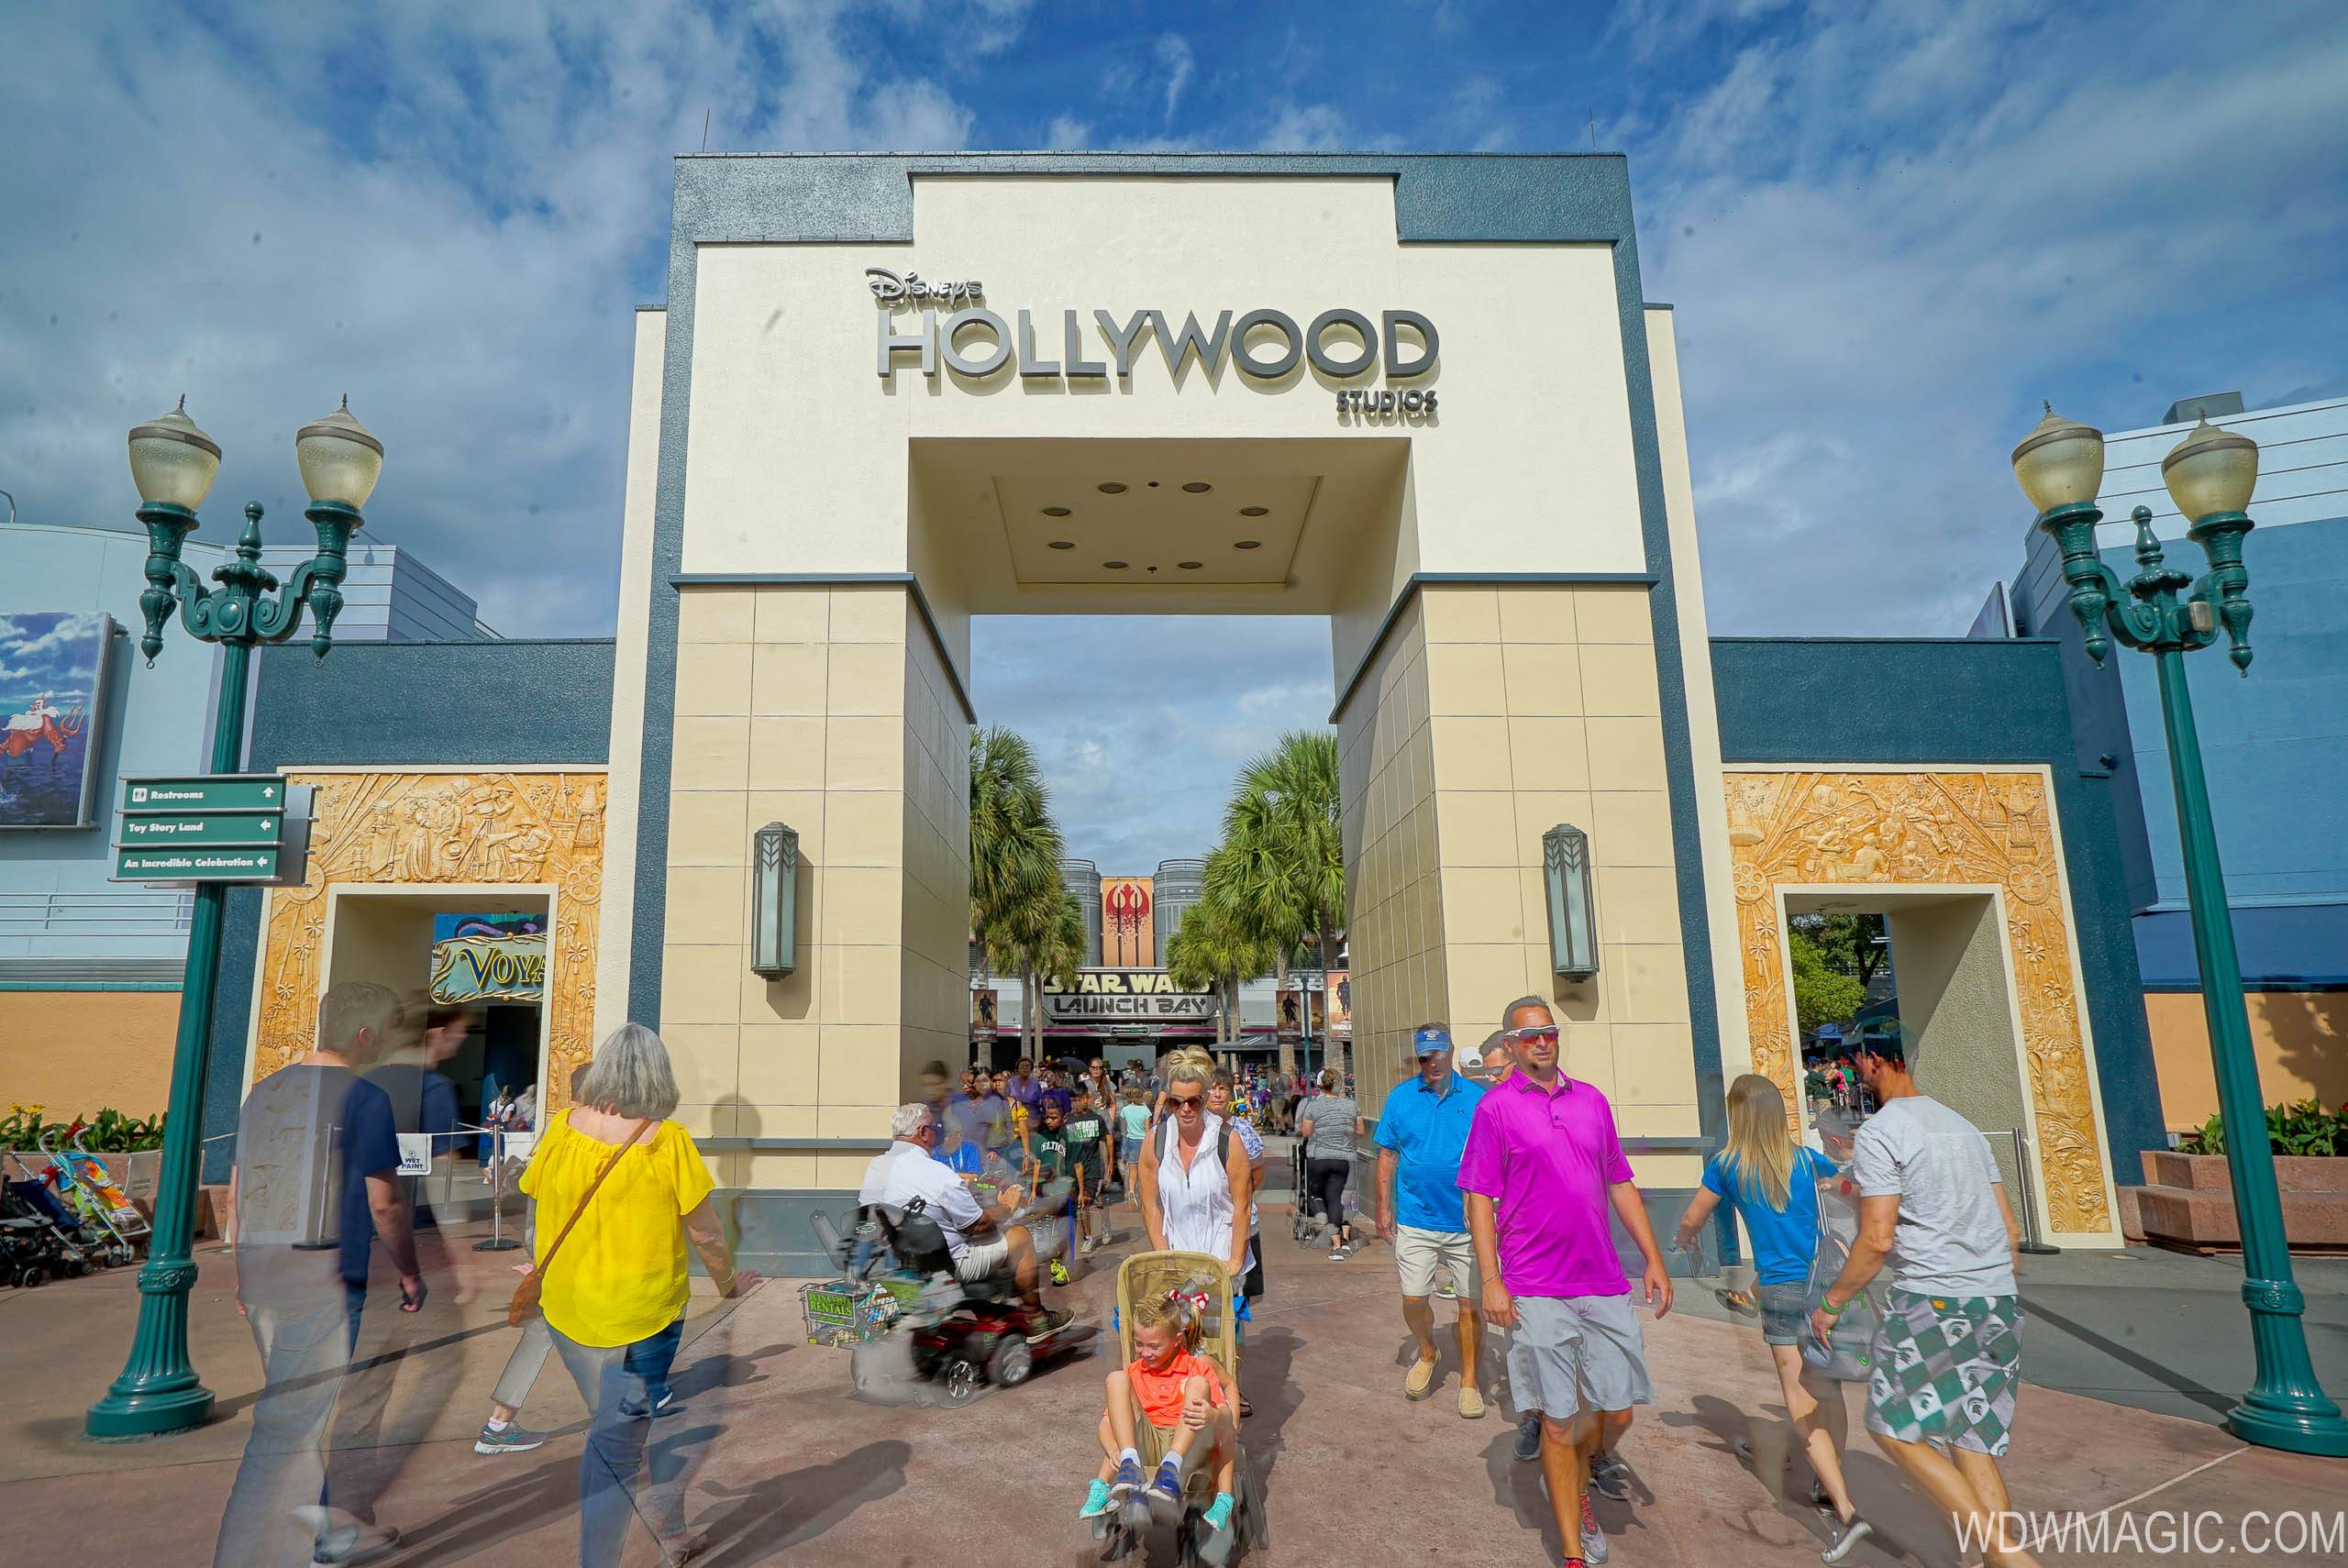 PHOTOS - Disney's Hollywood Studios archway with new logo